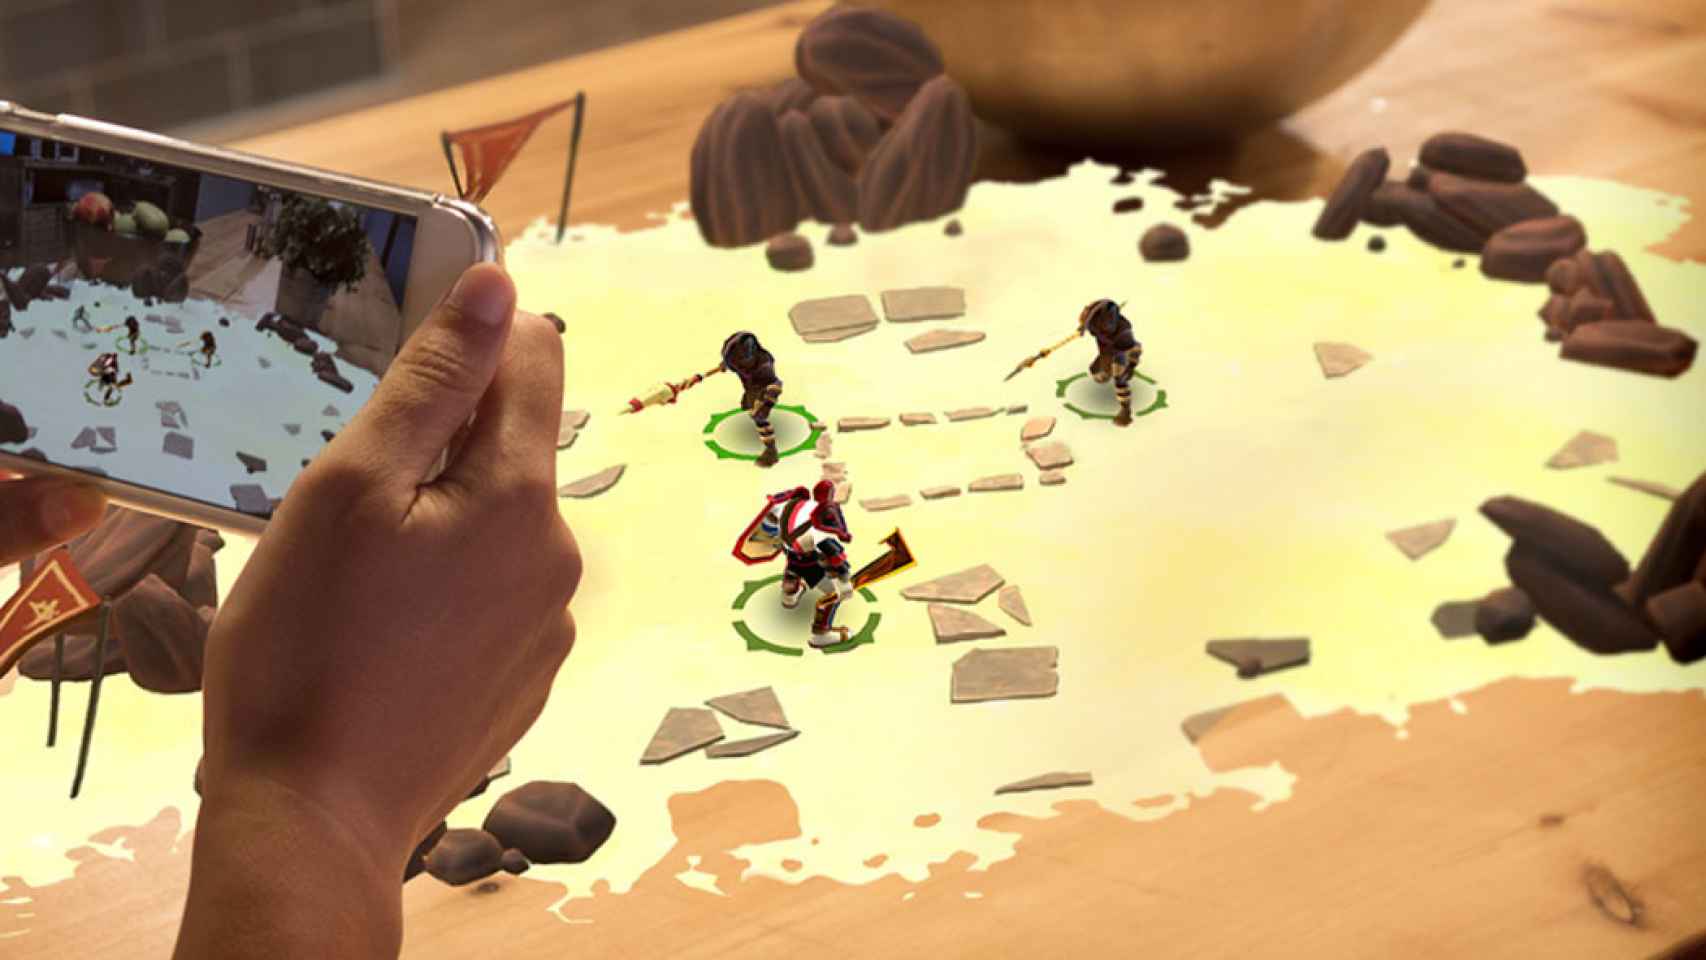 genera games gladiator heroes arkit ios 11 realidad aumentada apple